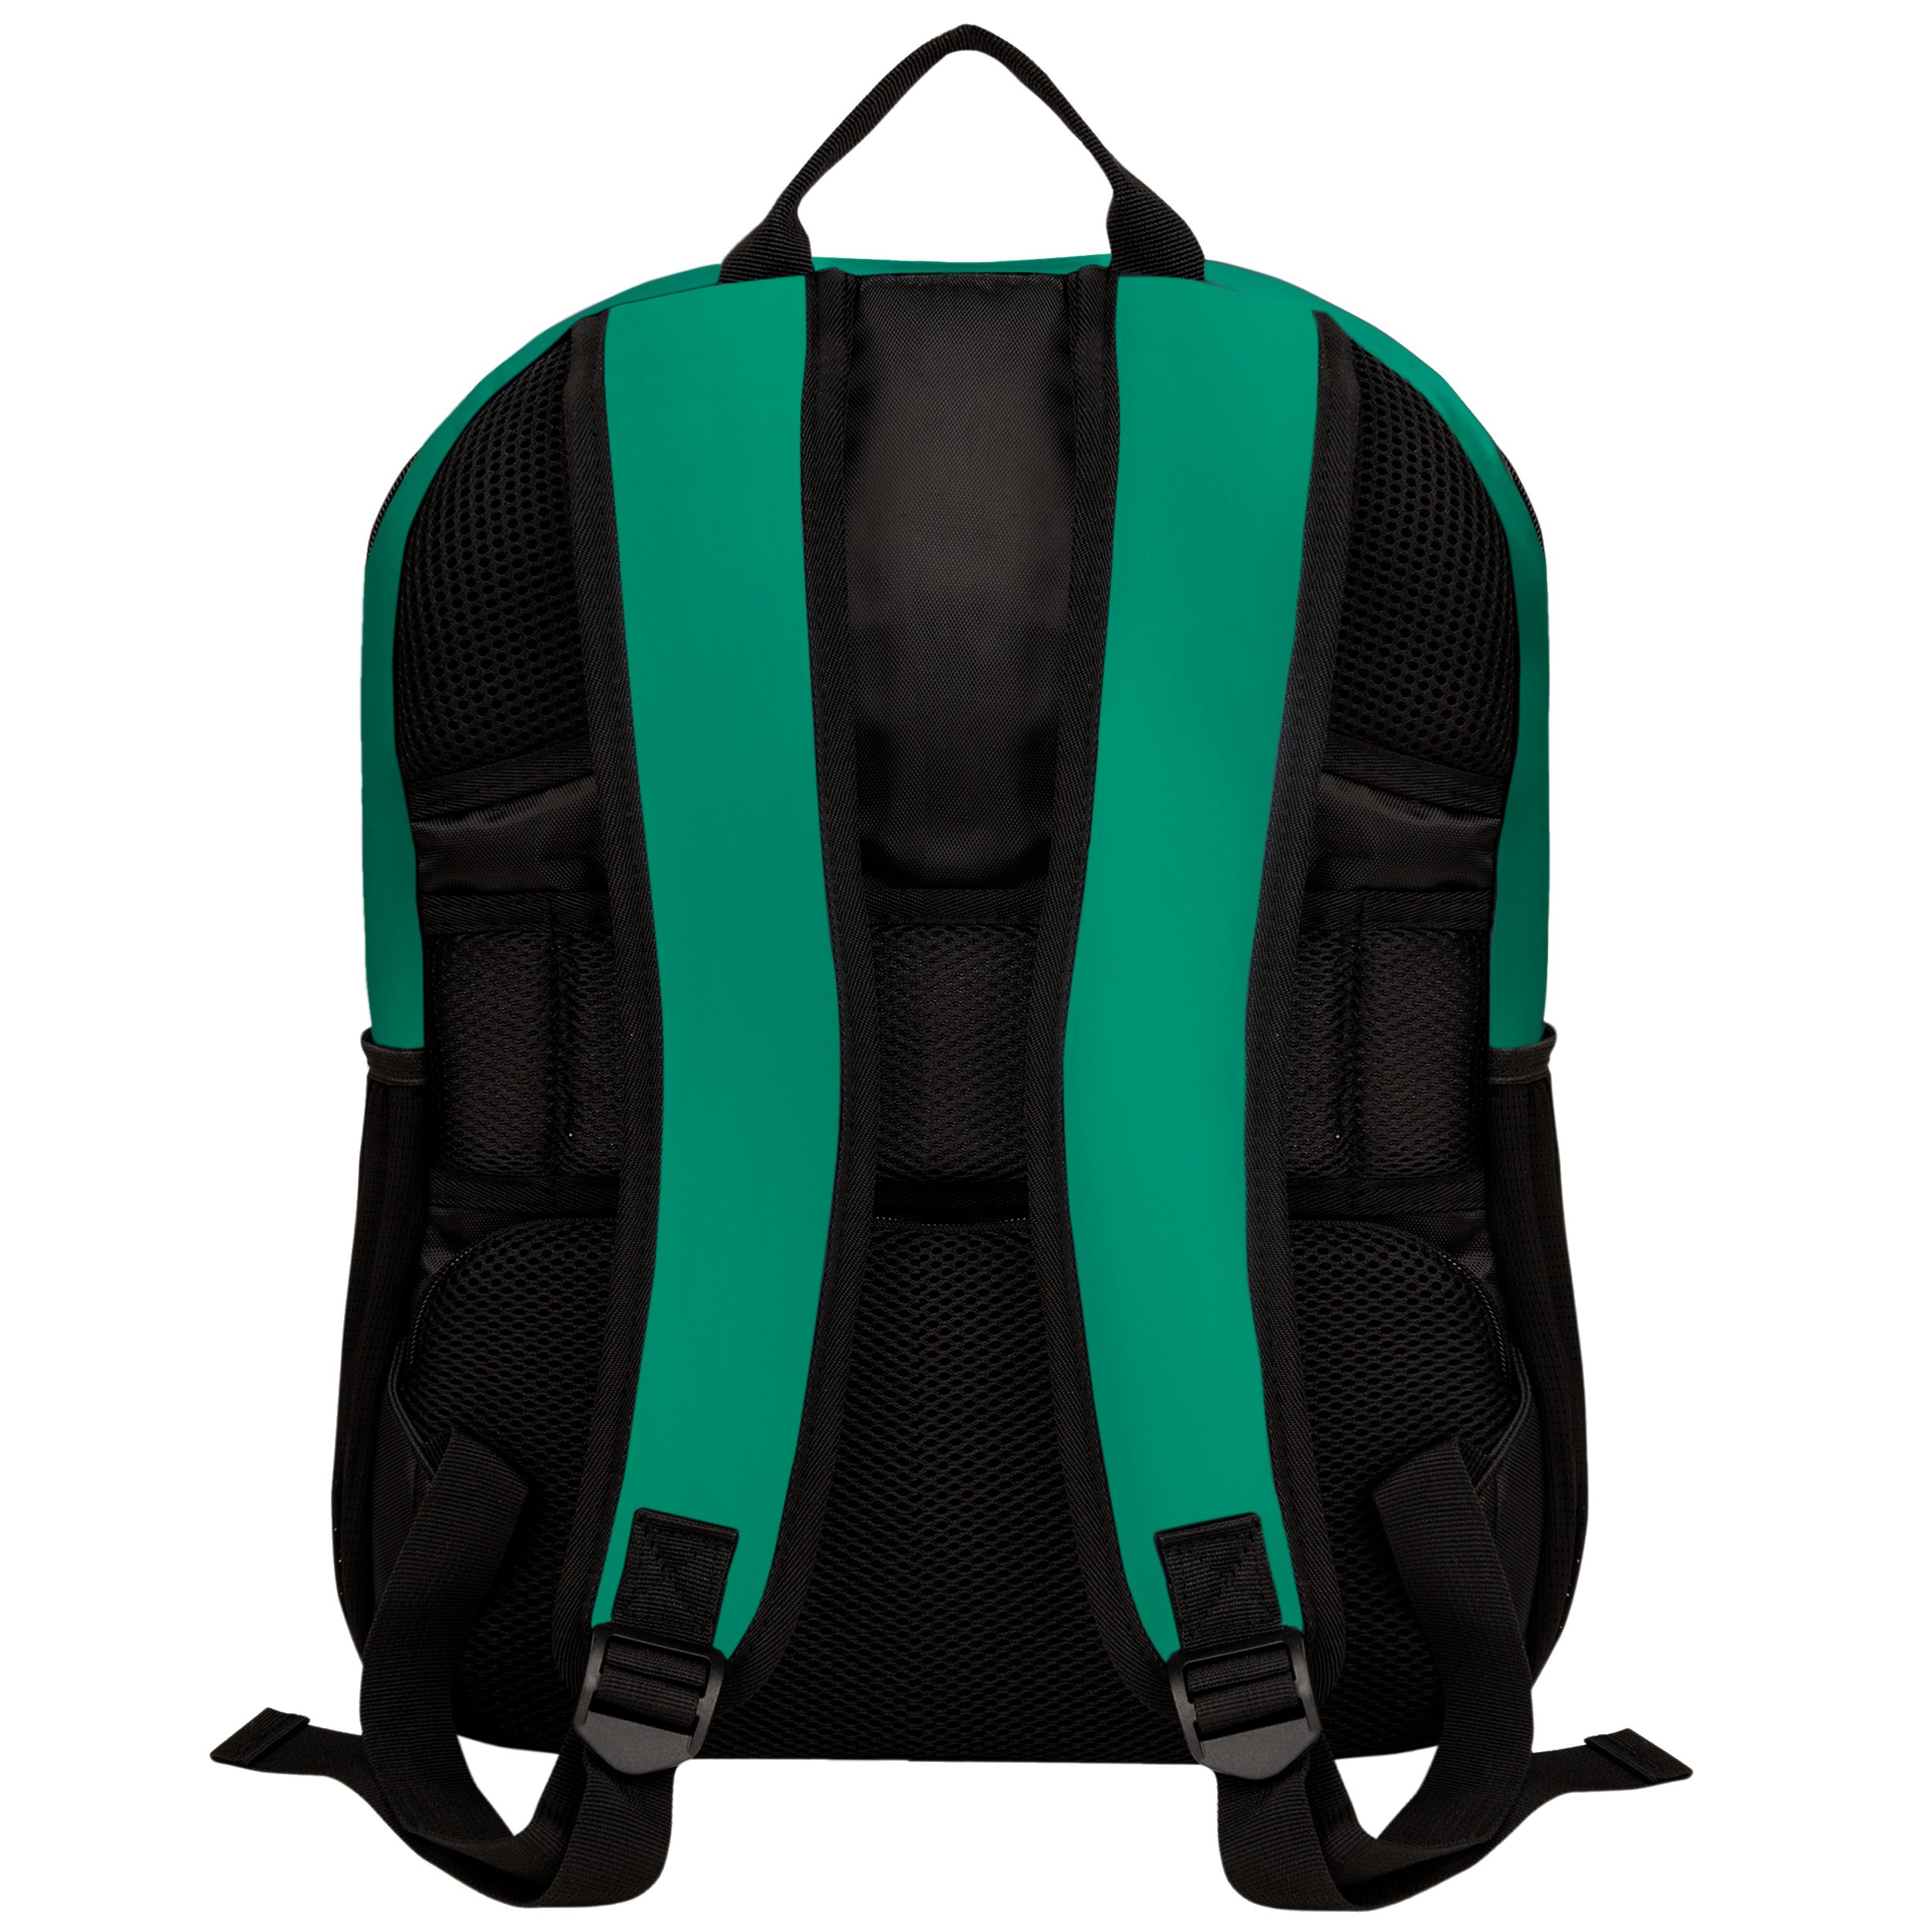 Green 15-inch Laptop Backpack for HP 14 15 Laptop, Pavilion 14 15, Envy x360